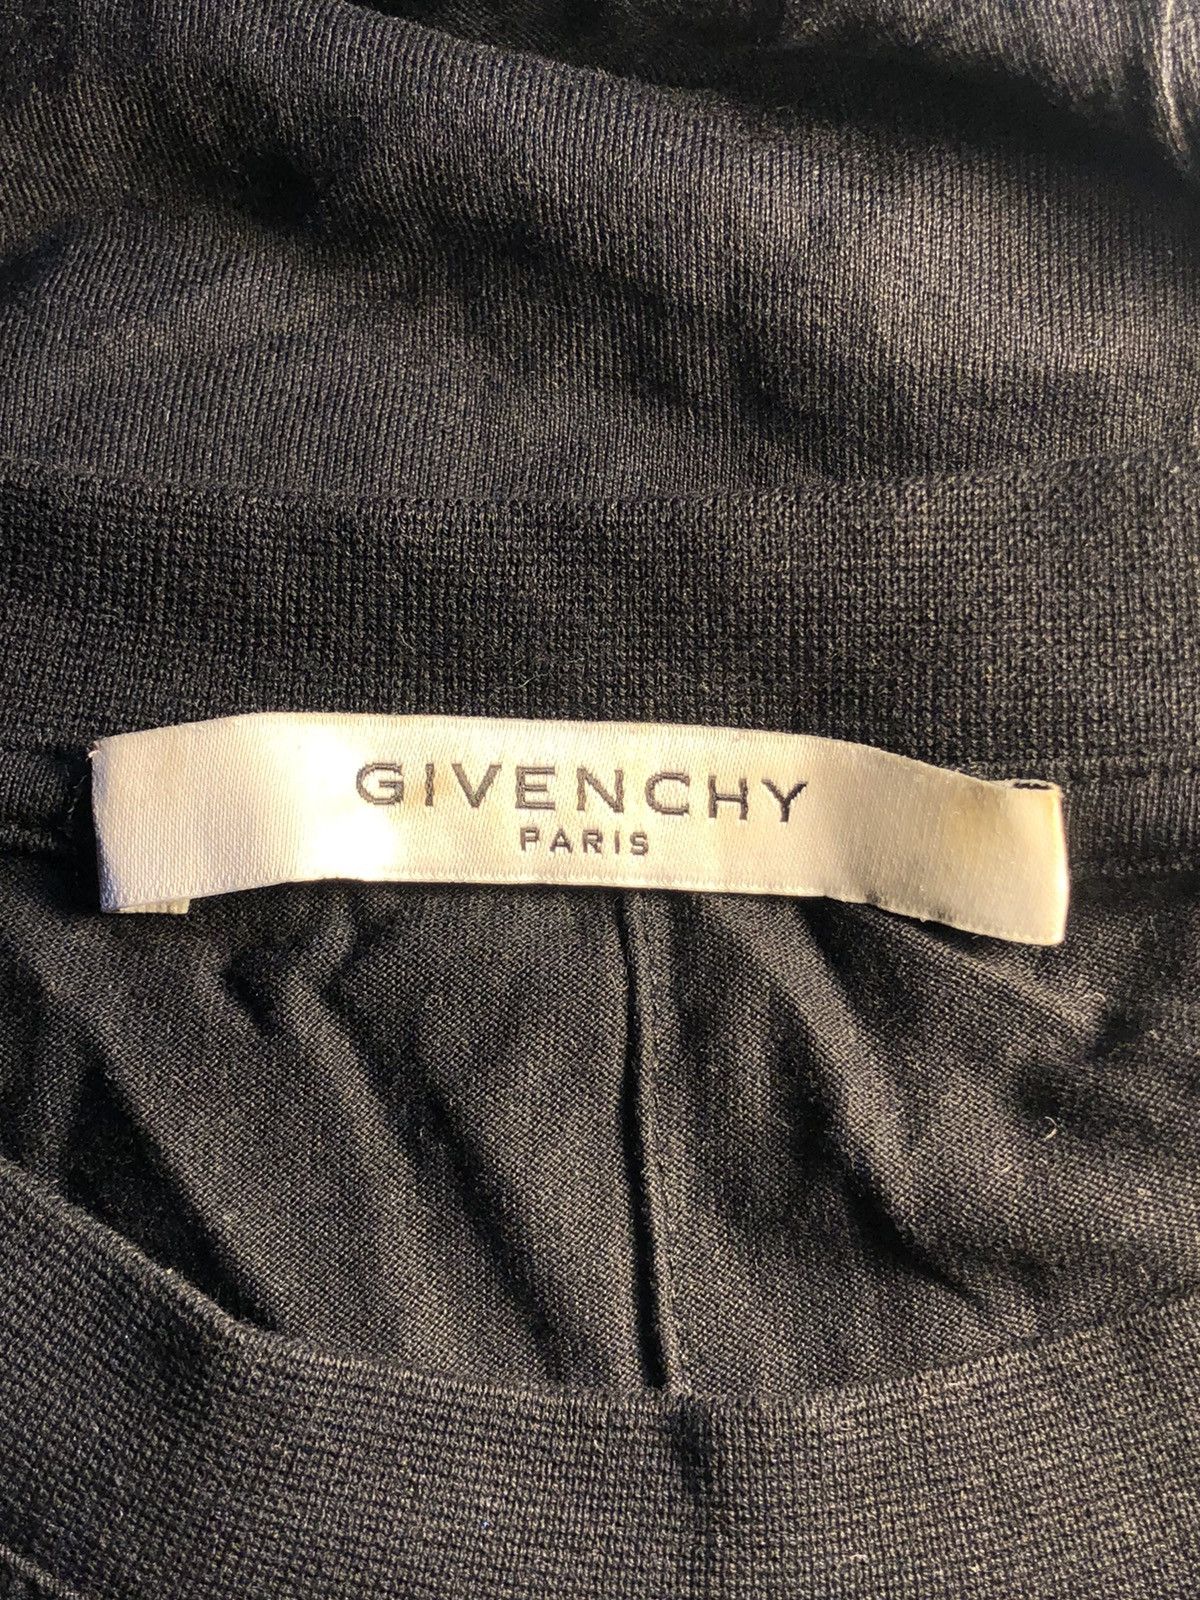 Givenchy GIVENCHY ABSTRACT DOG OVERSIZED T-SHIRT Size US L / EU 52-54 / 3 - 3 Thumbnail